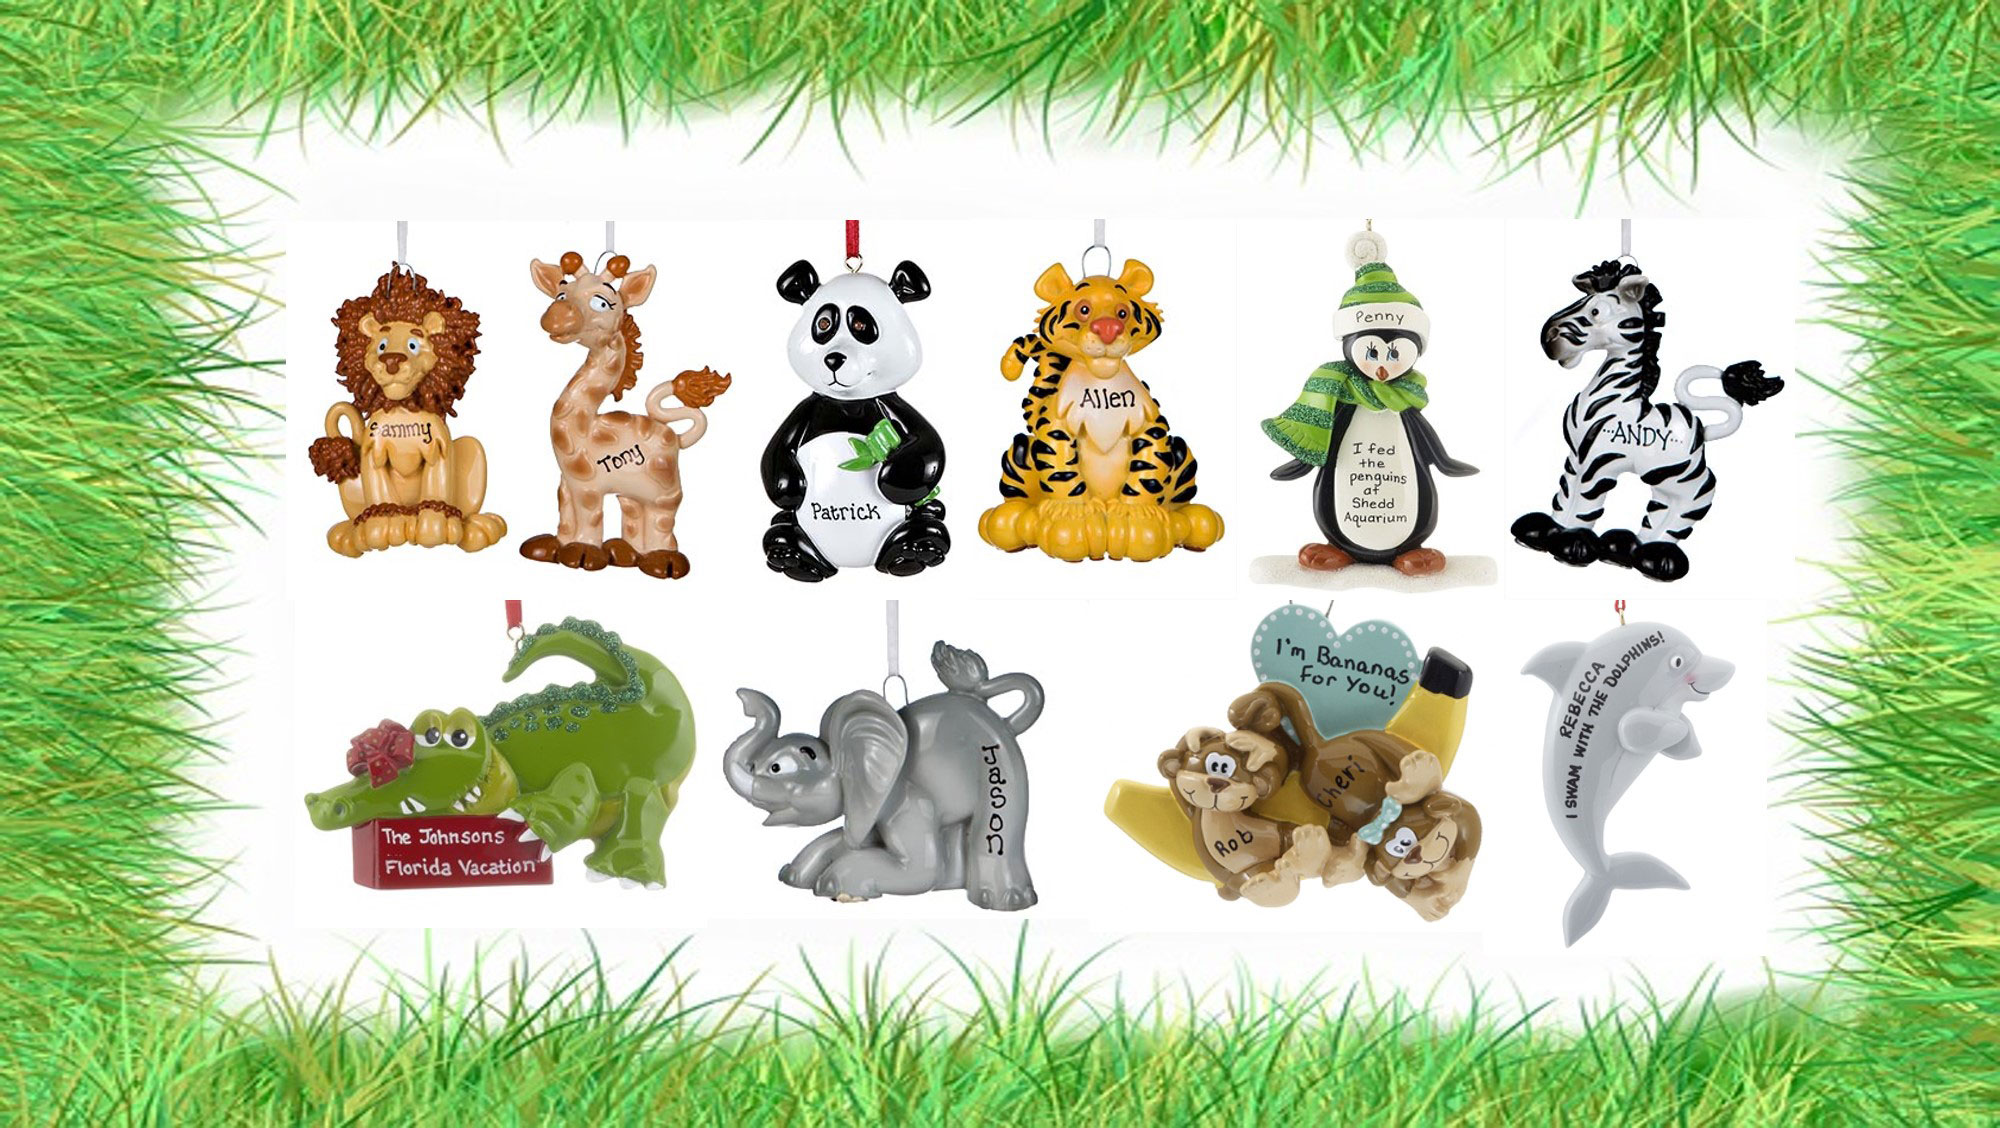 Find animal ornaments including giraffes, tigers, zebras, elephants, dolphins and more! | OrnamentShop.com